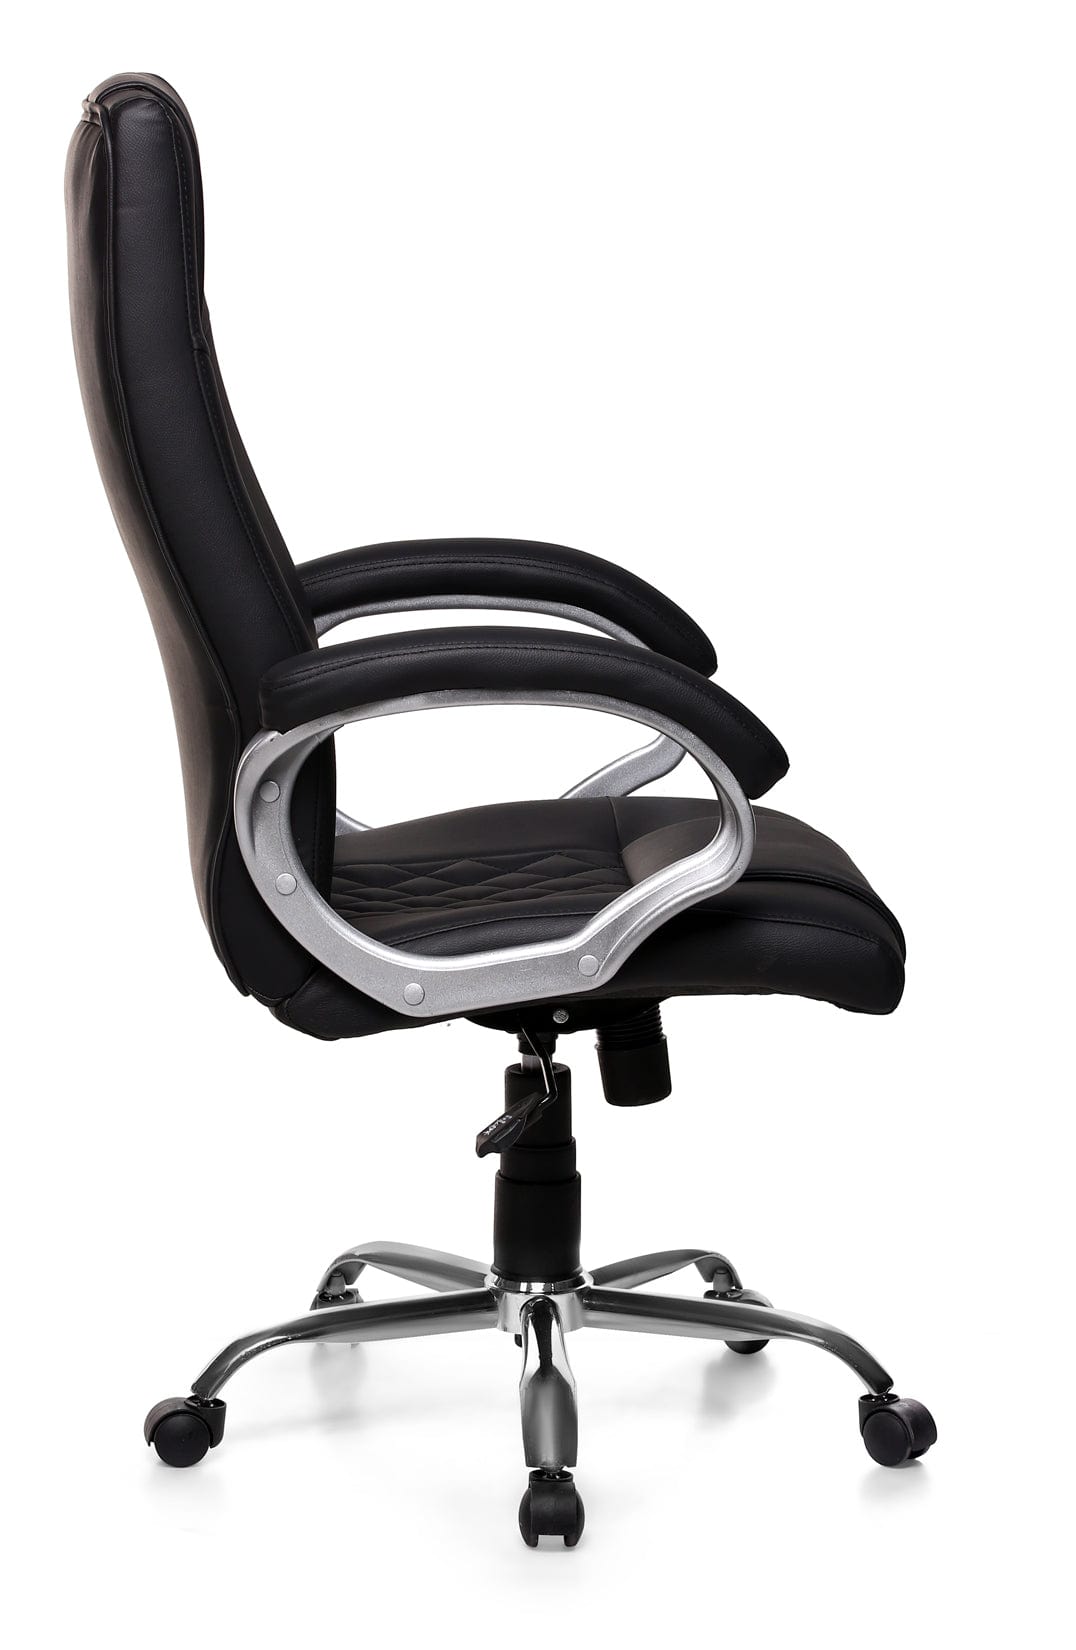 Adiko Sleek Executive Revolving Office Chair in Black